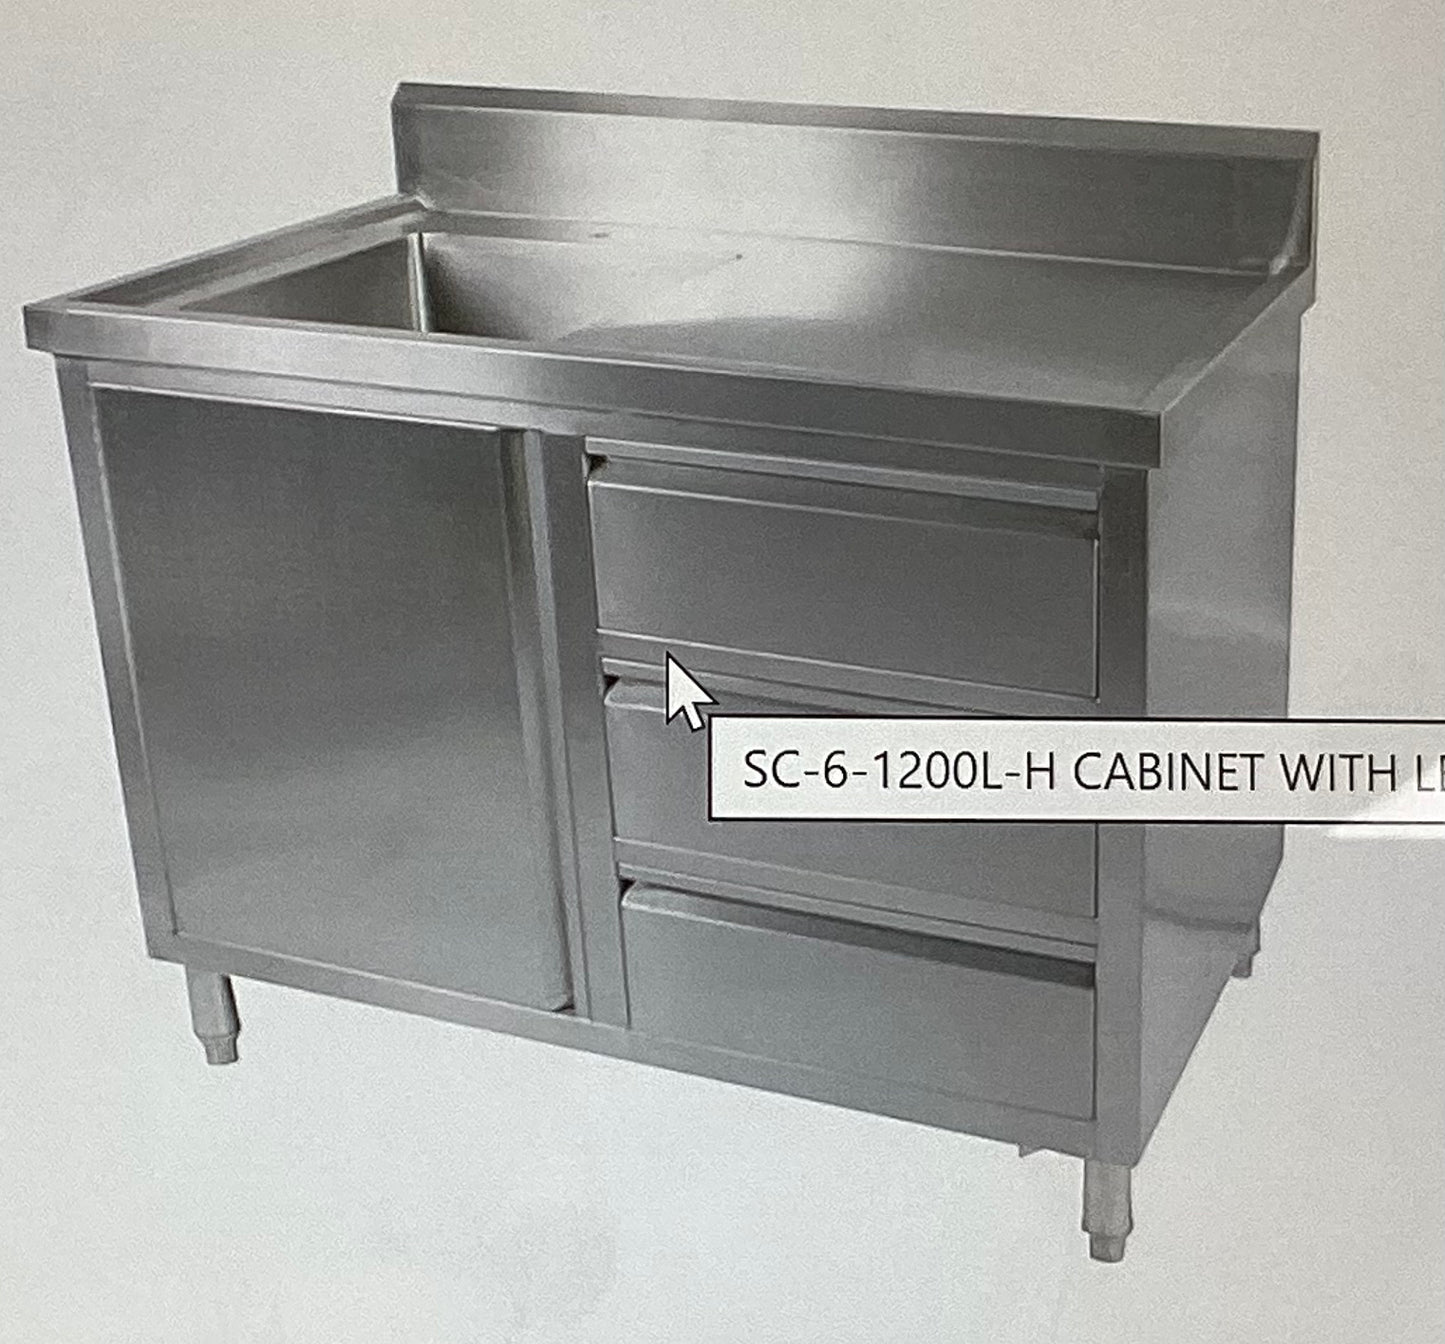 SC-6-1200L-H Cabinetd with Left Sink